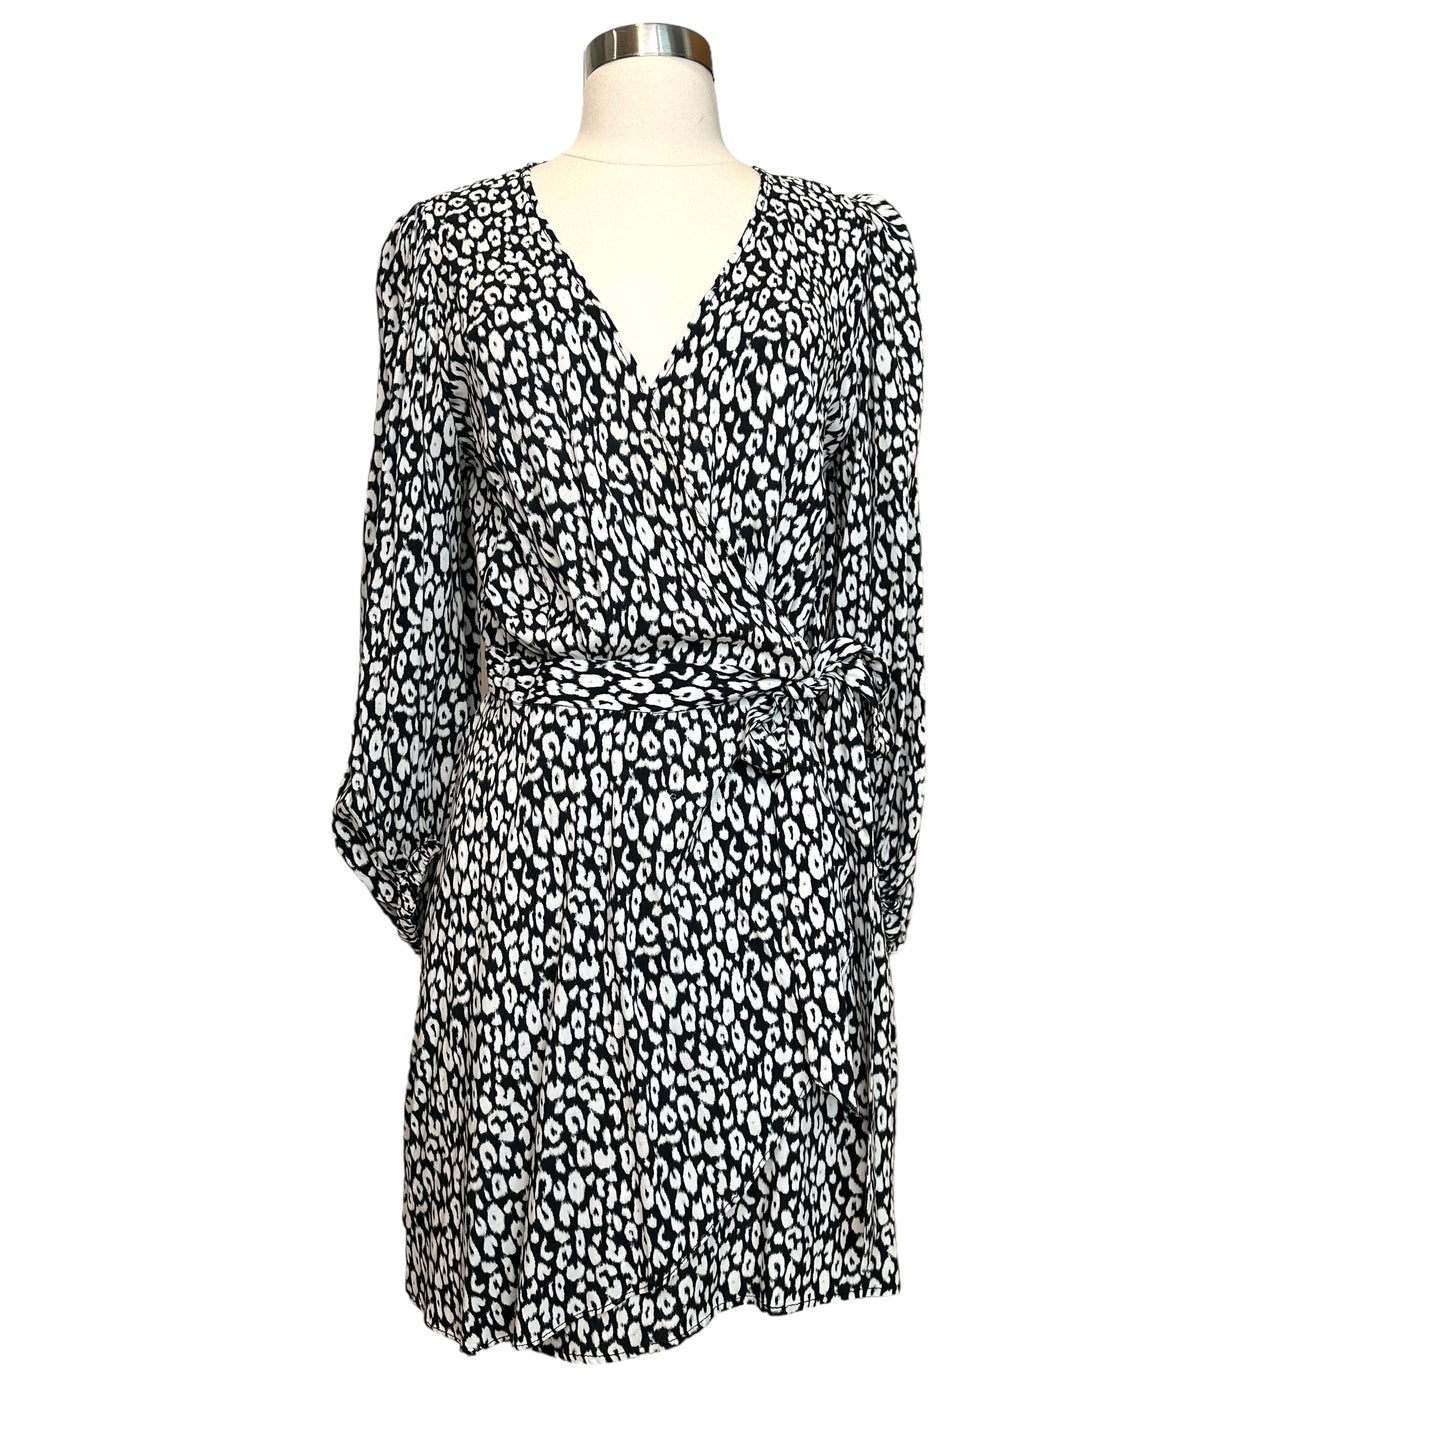 Black & White Leopard Dress - M